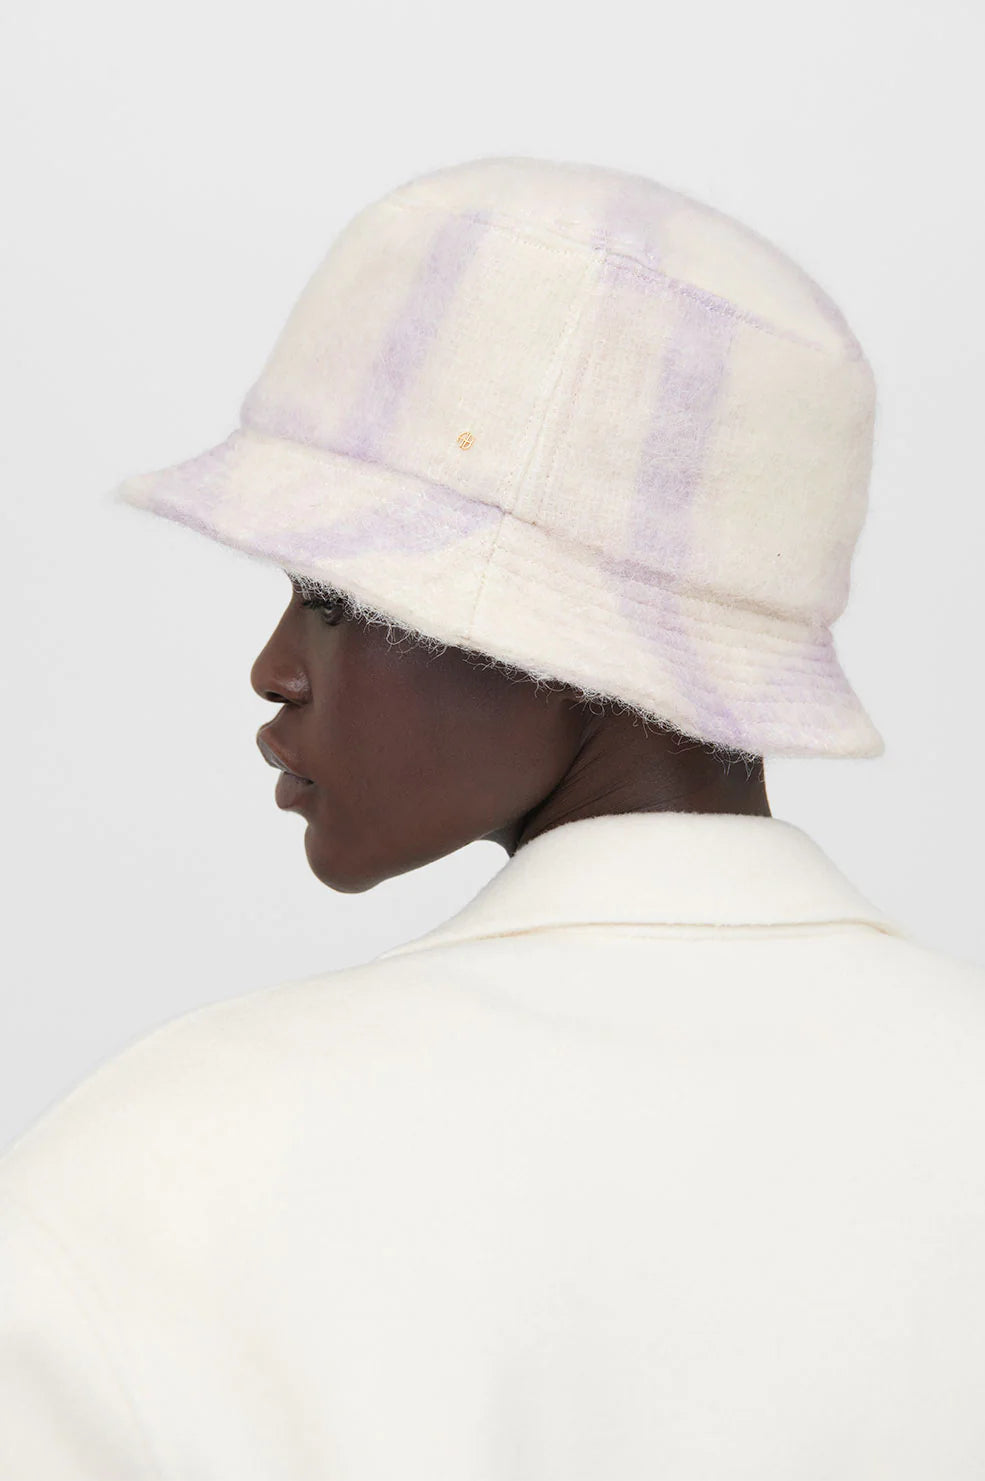 Cami Bucket Hat - Lavender and Cream Check